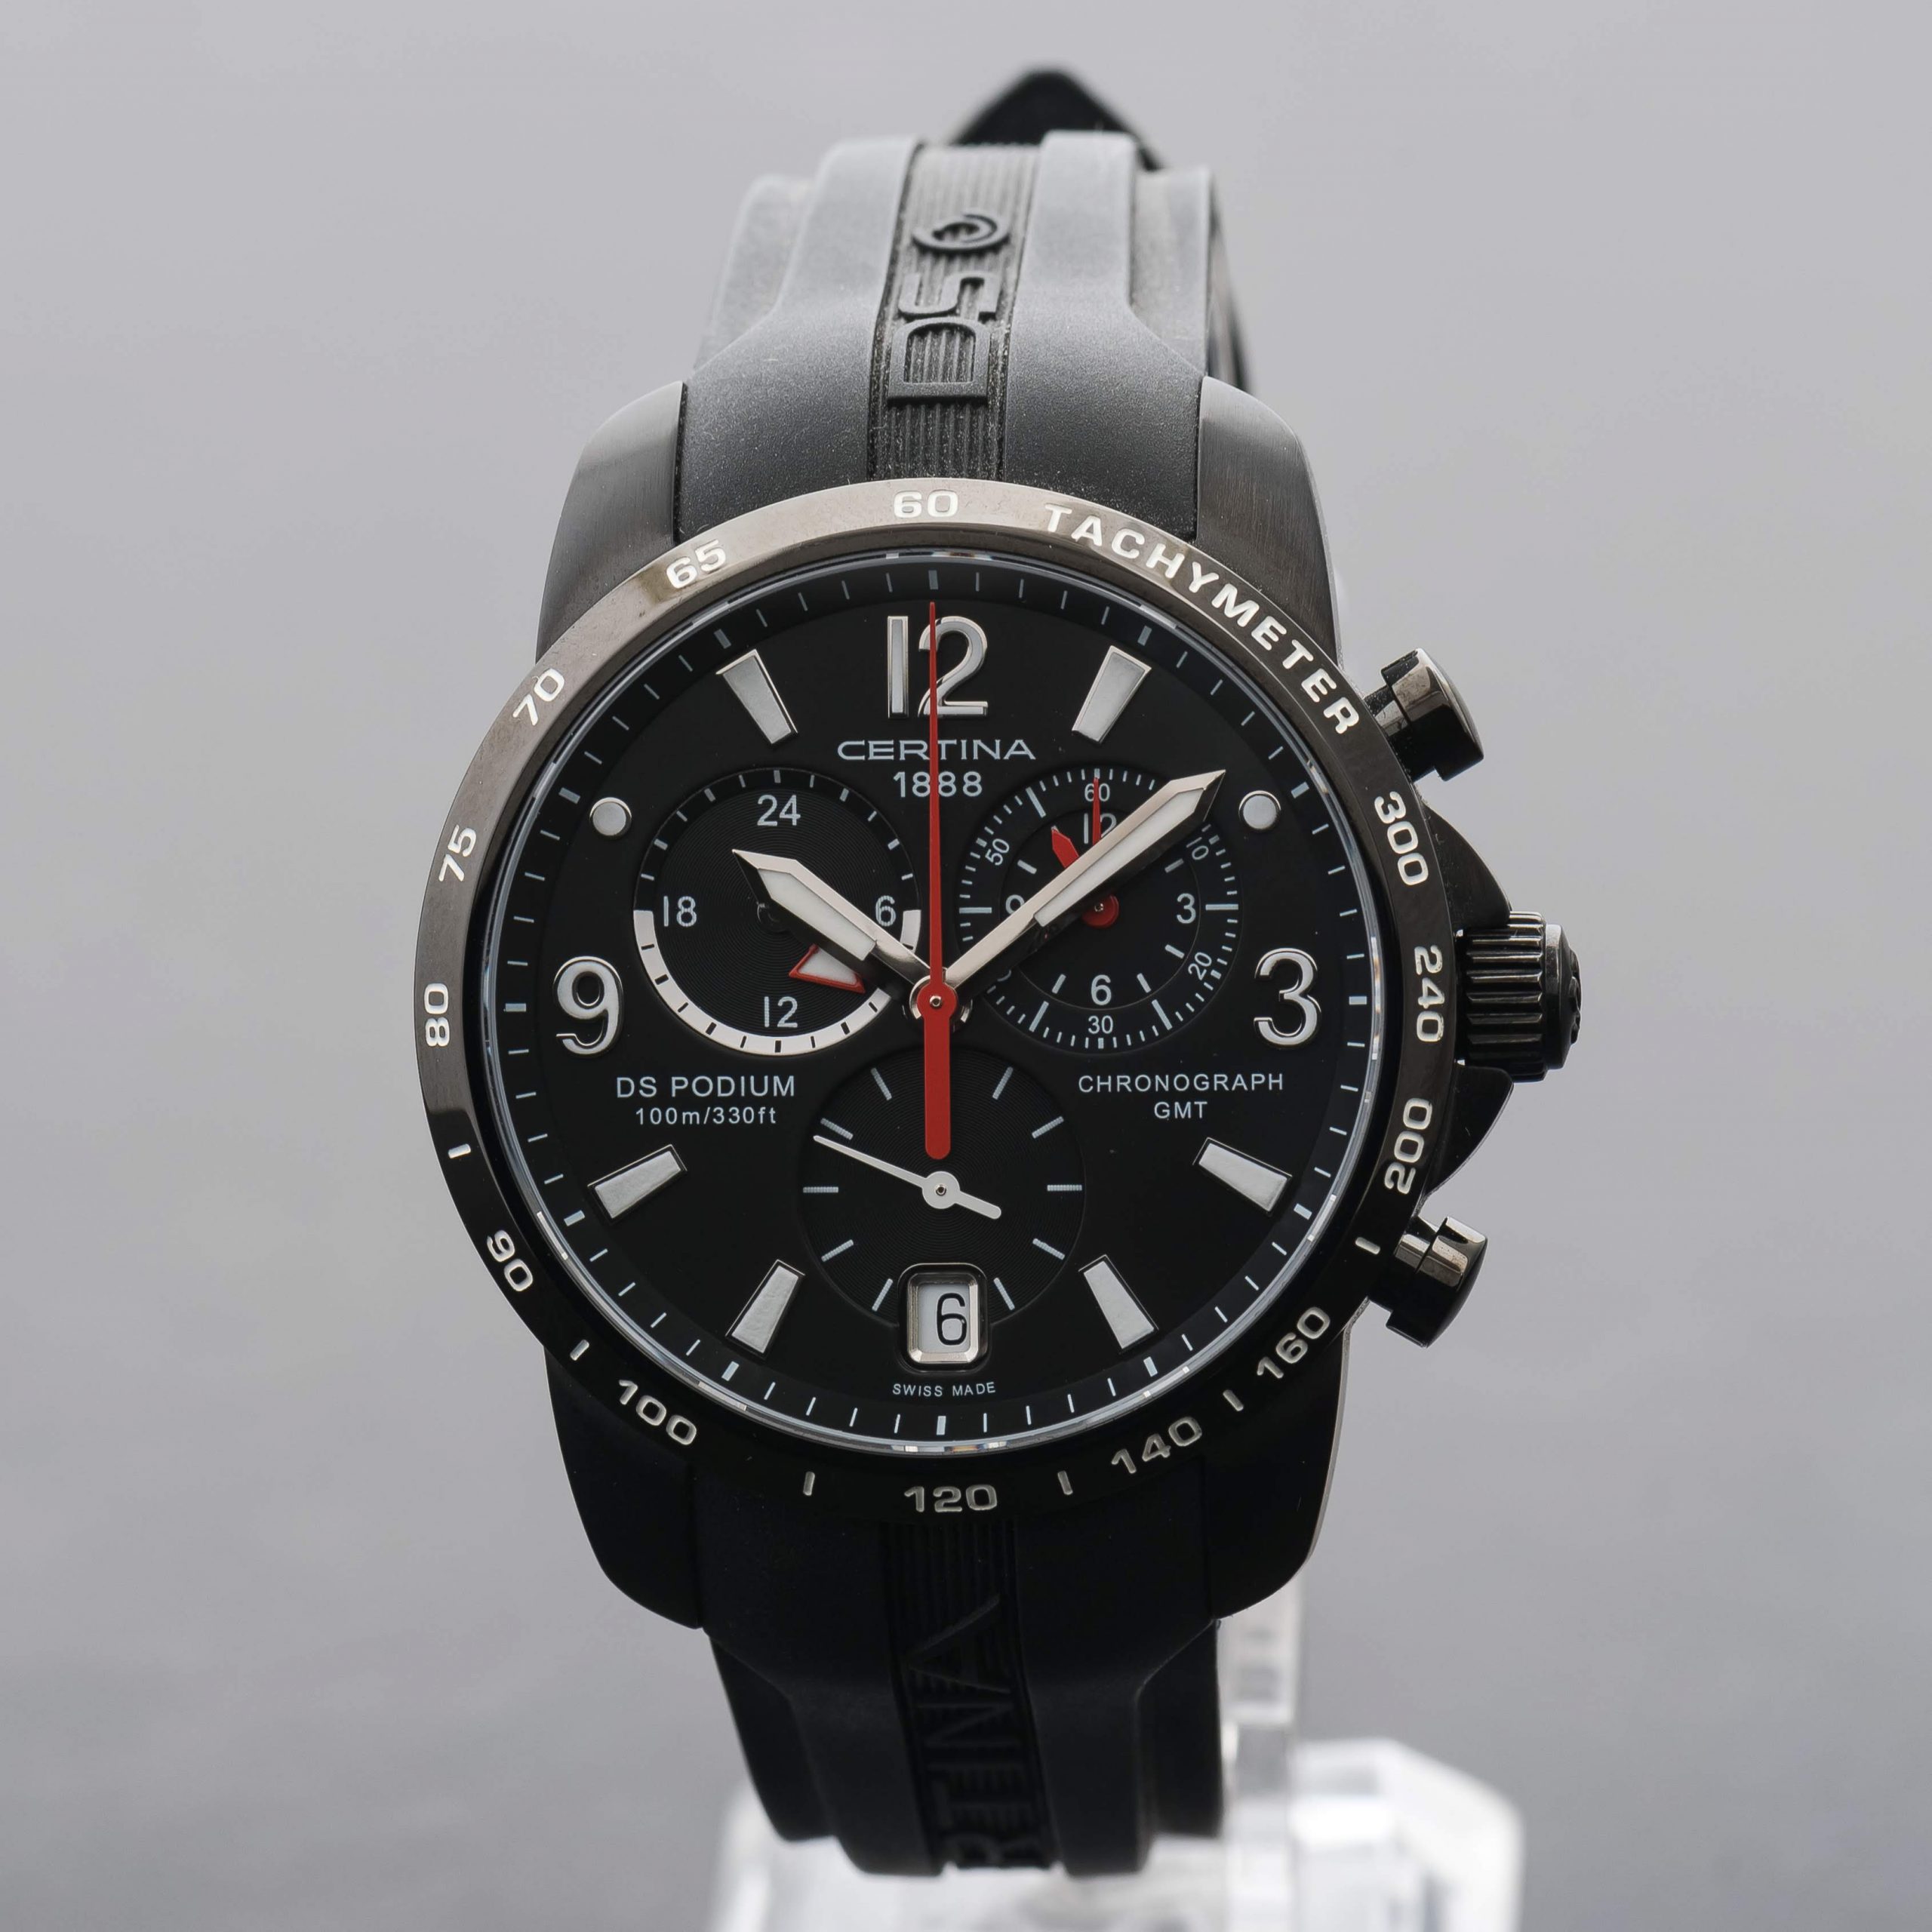 Certina DS Podium GMT Chronograph Big Size Black Dial Men's Watch C0016391605700